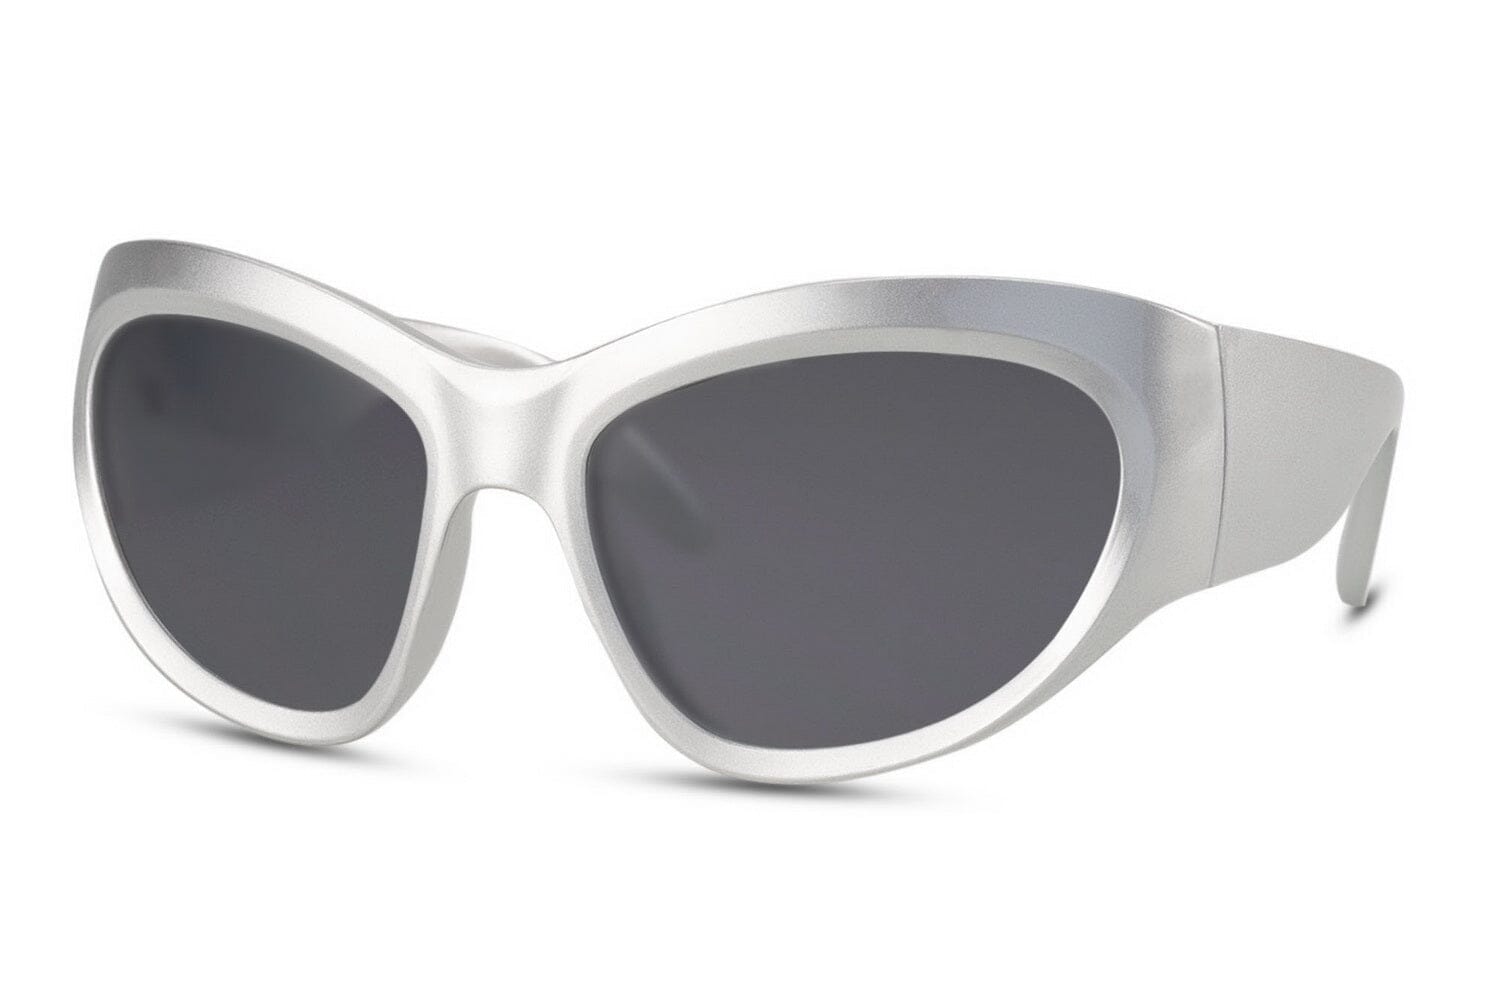 Bug eyes sunglasses. Silver frames. Grey lenses.